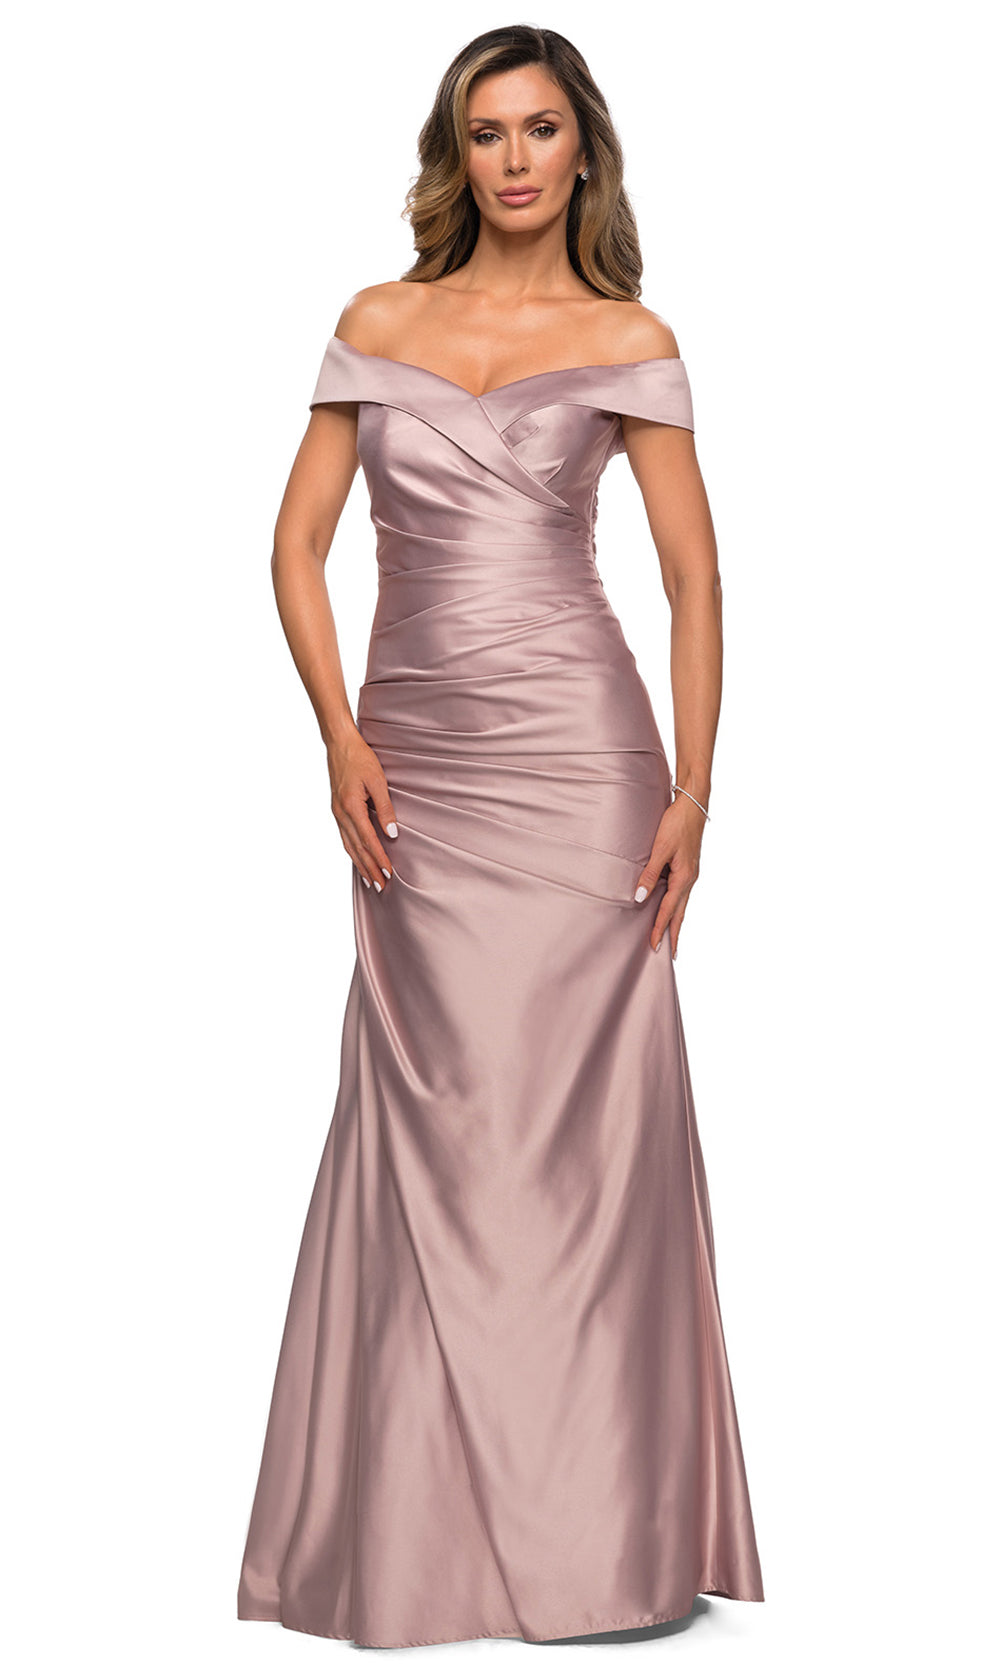 La Femme - 28103 Off-Shoulder Ruched Fitted Bodice Satin Evening Dress In Champagne & Gold